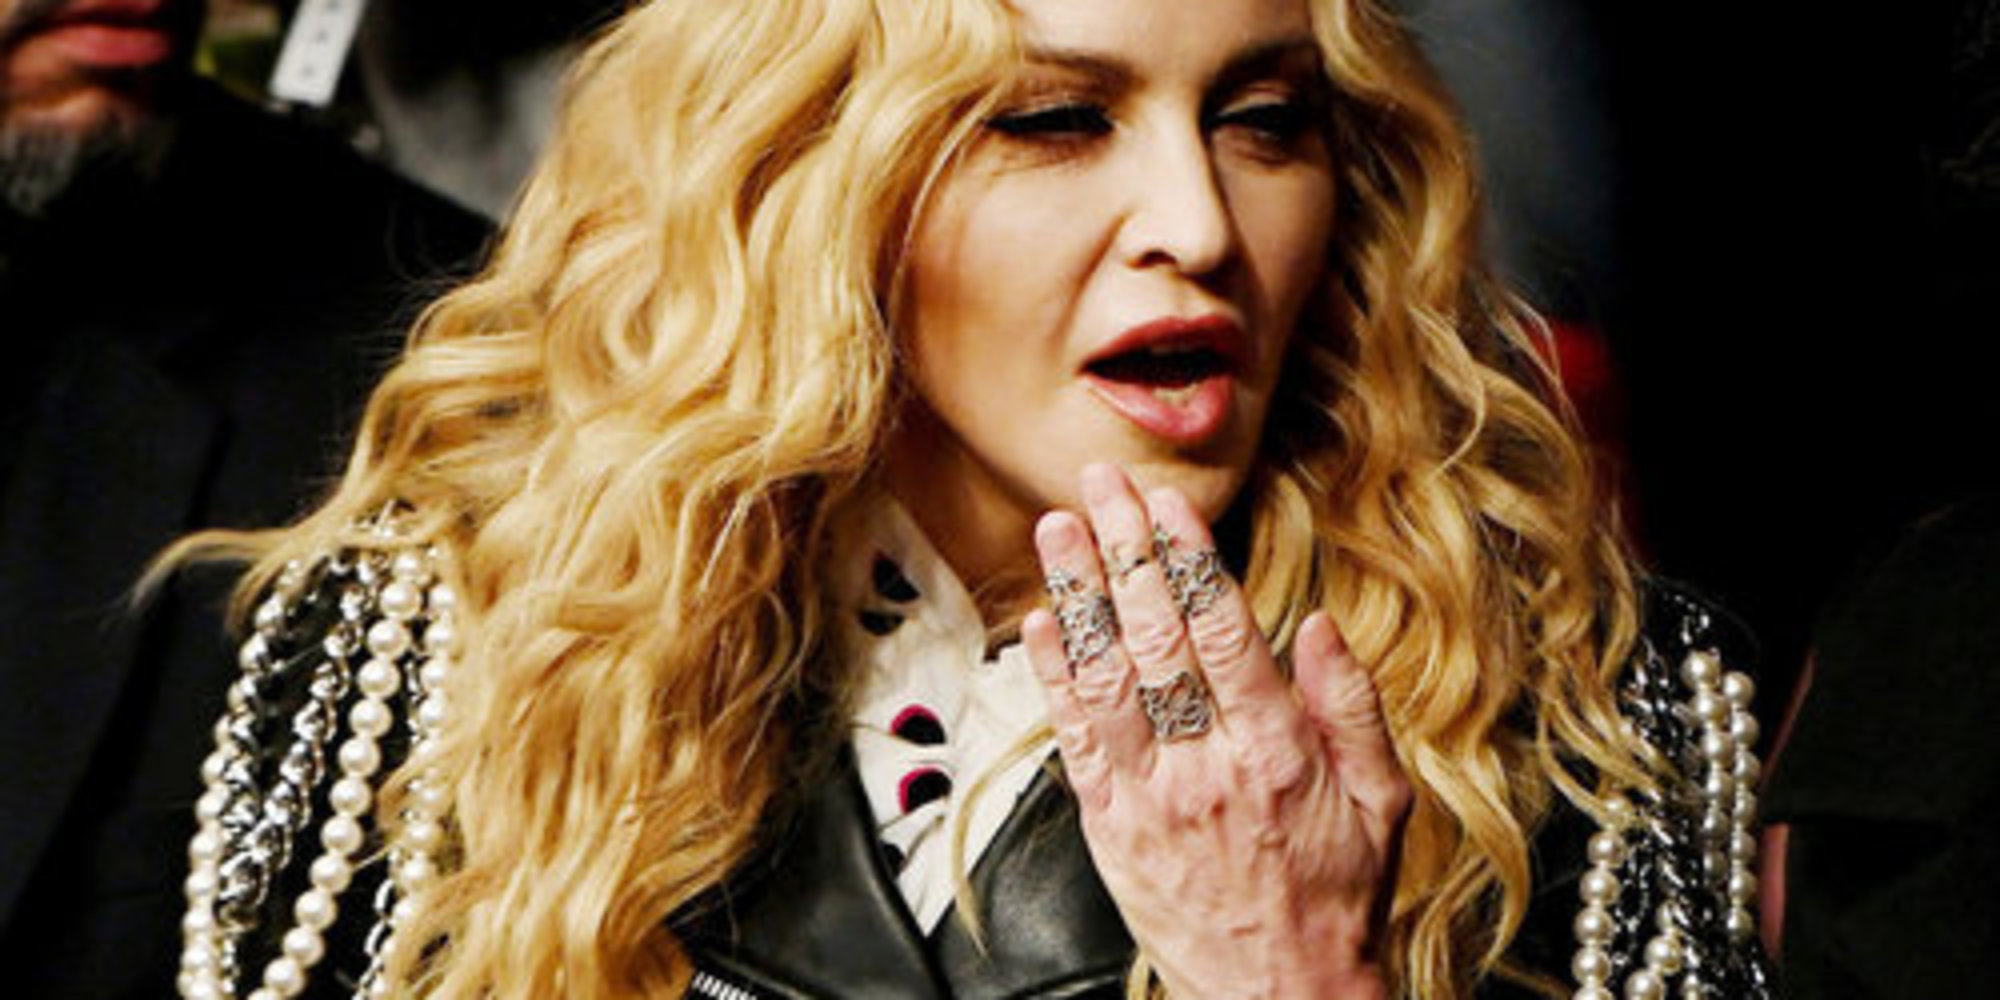 NEW YORK, NY - NOVEMBER 12: Music recording artist Madonna attends the UFC 205 event at Madison Square Garden on November 12, 2016 in New York City. (Photo by Jeff Bottari/Zuffa LLC/Zuffa LLC via Getty Images)